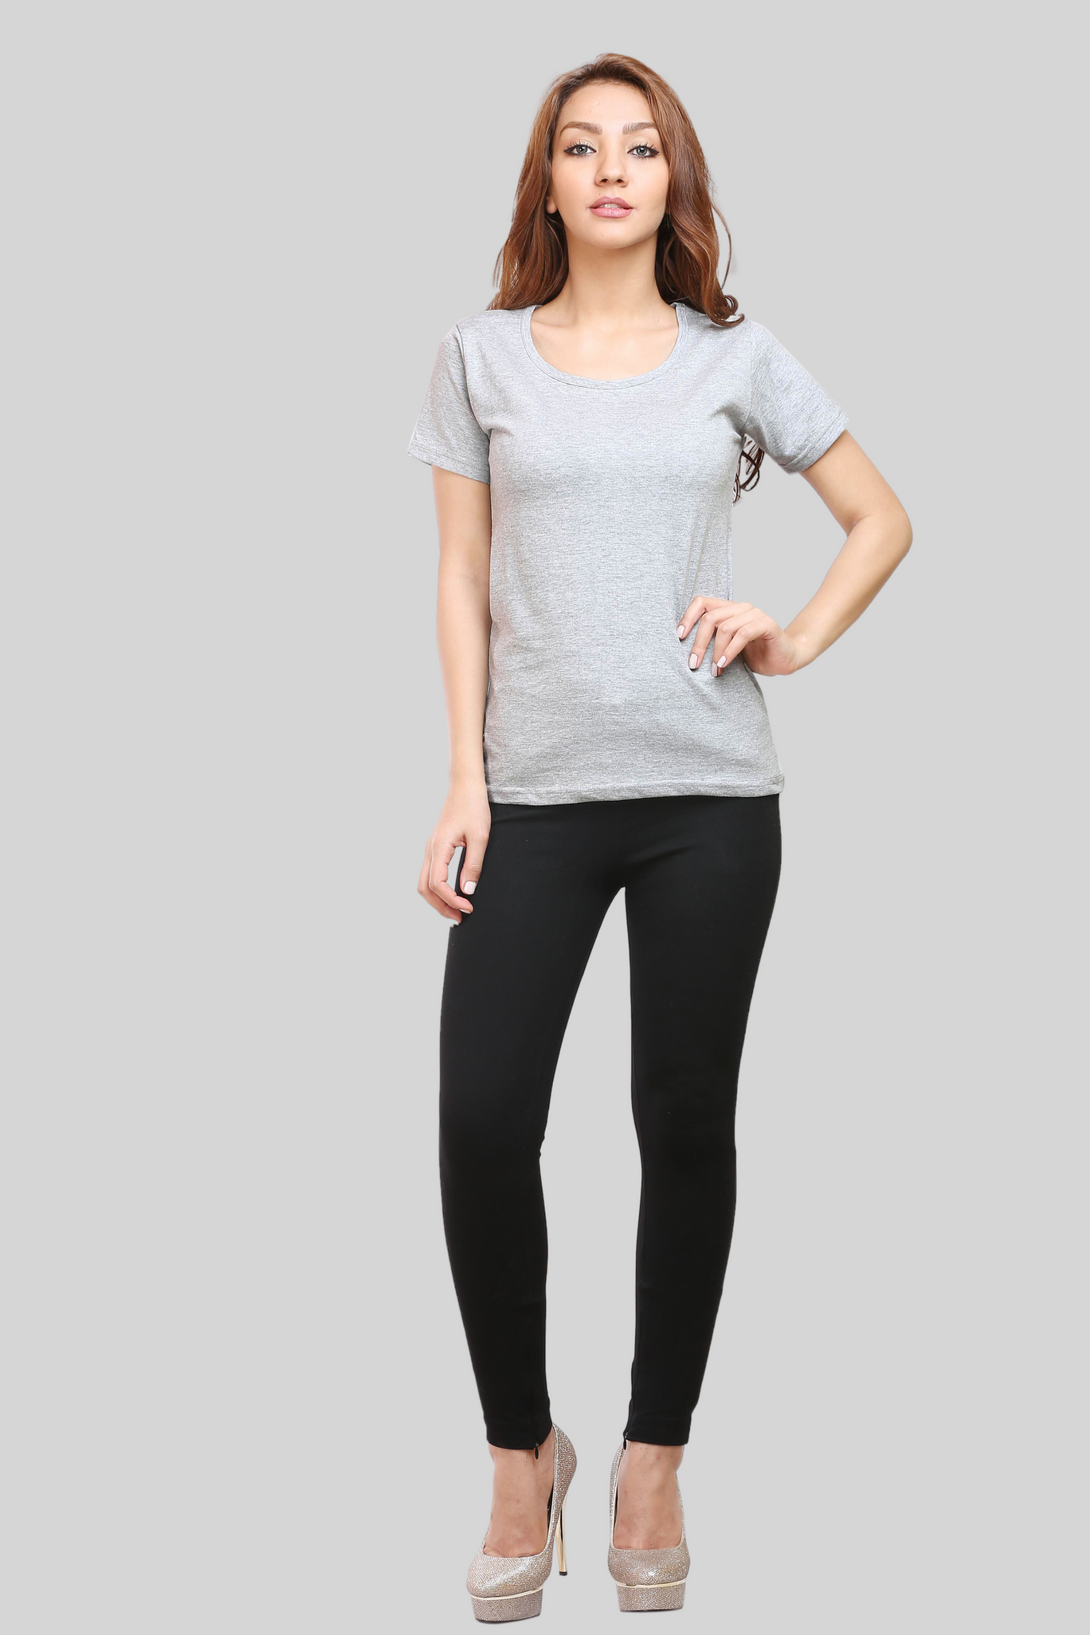 Grey Melange Scoop Neck T-Shirt For Women - WowWaves - 2